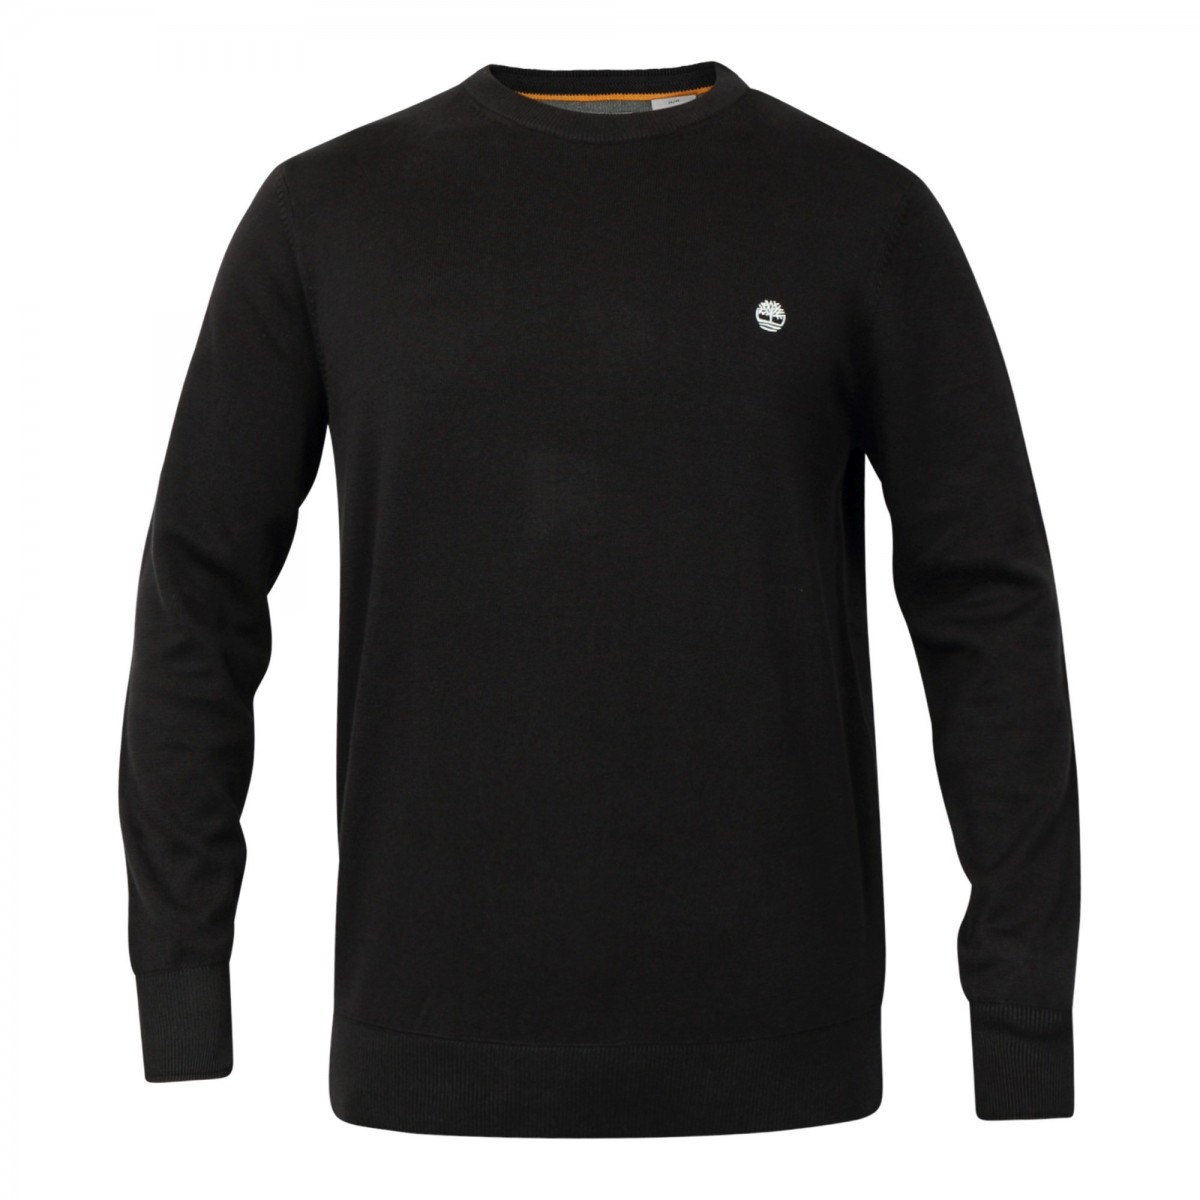 Timberland Williams River Crew Sweater Black 0A2BMM001 Μαύρο